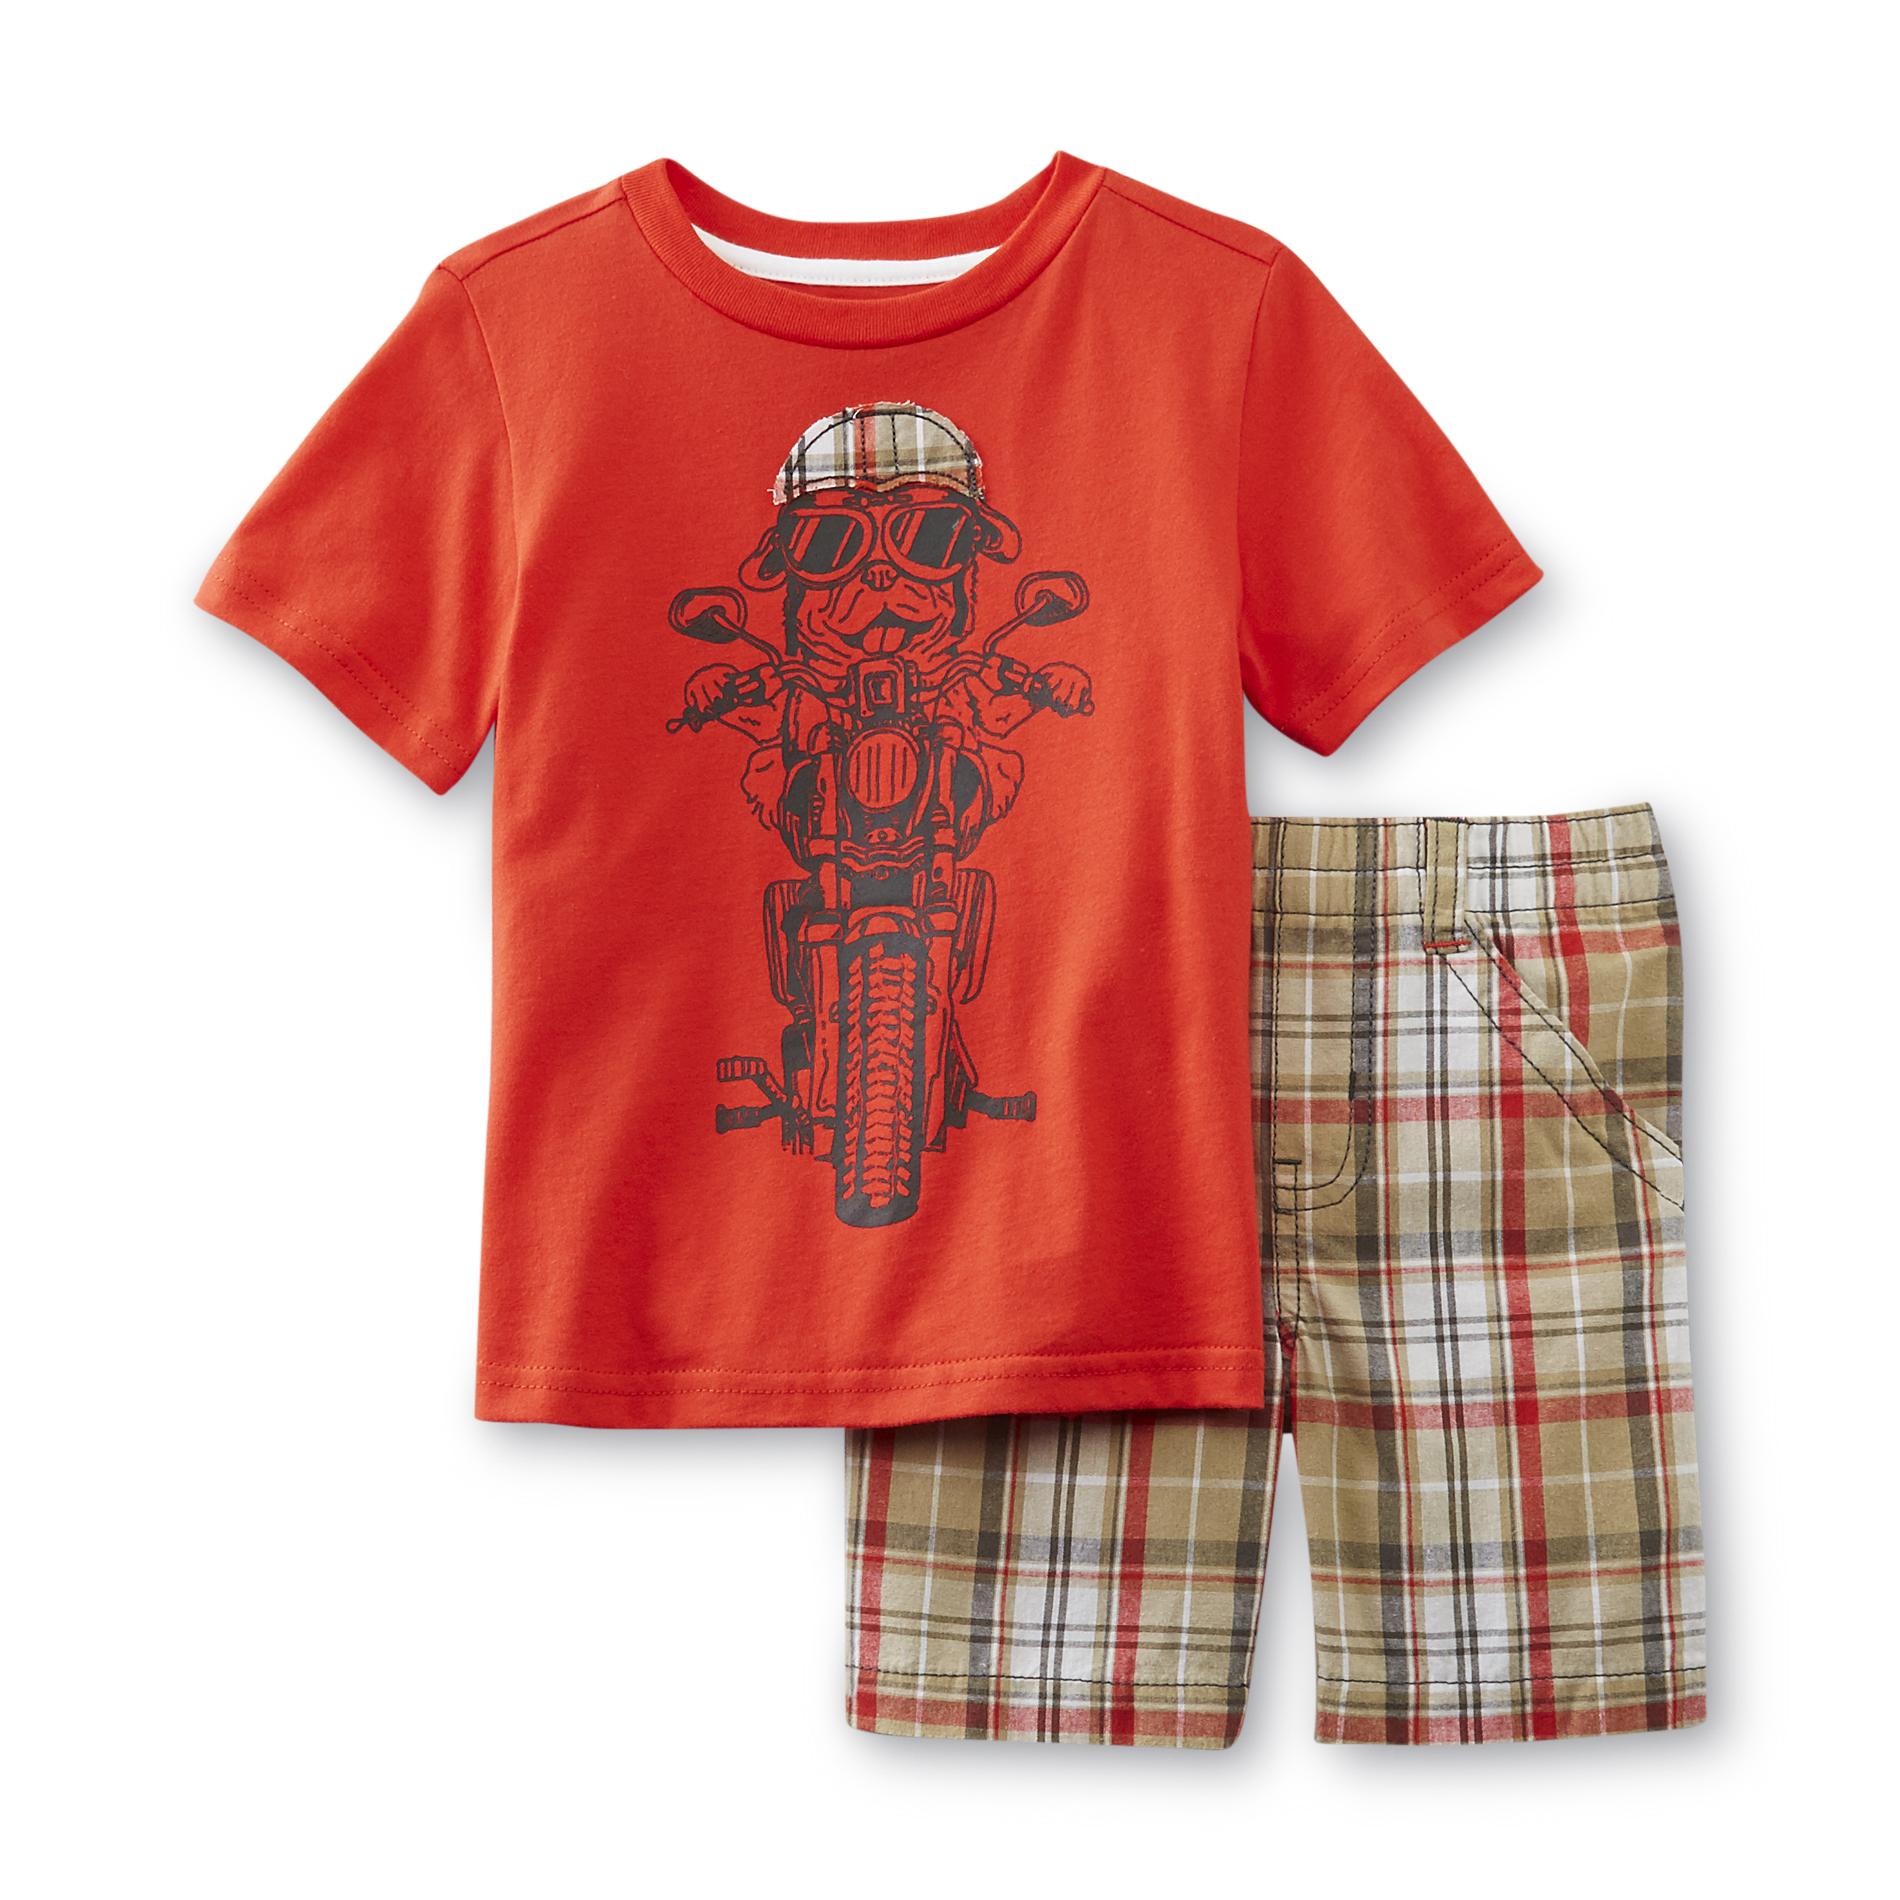 Toughskins Infant & Toddler Boy's Graphic T-Shirt & Shorts - Motorcycle & Plaid